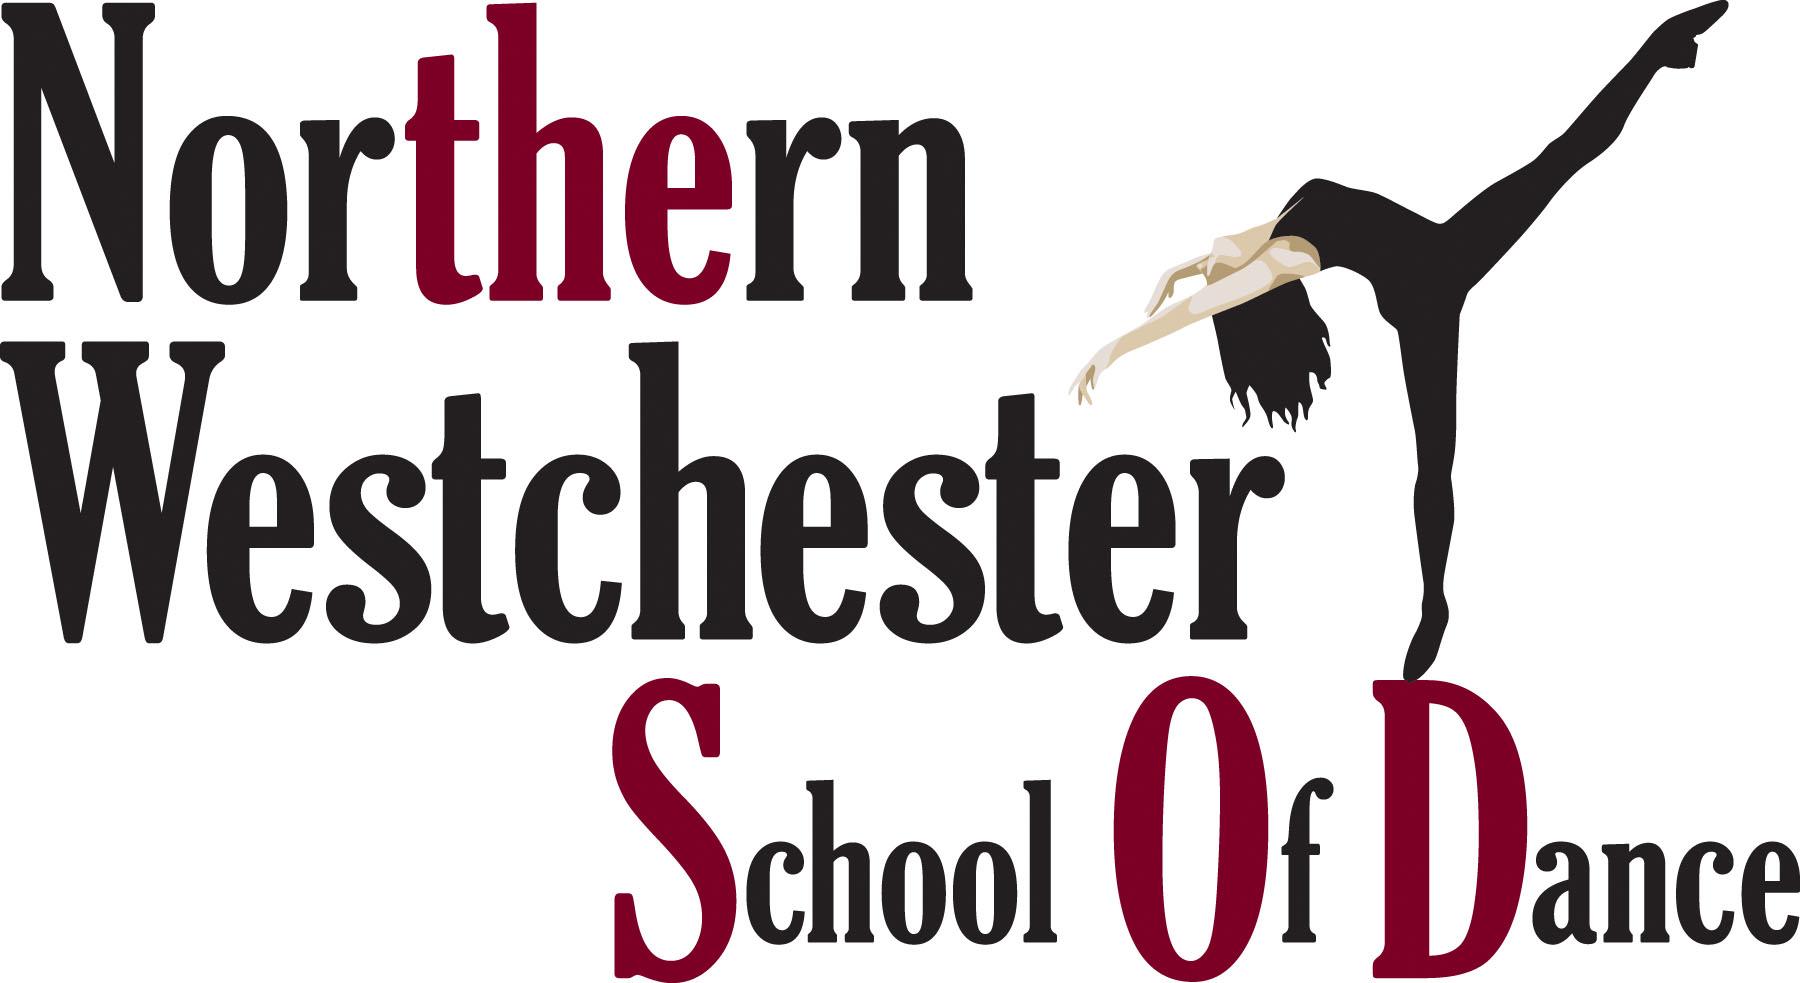 Northern Westchester School of Dance